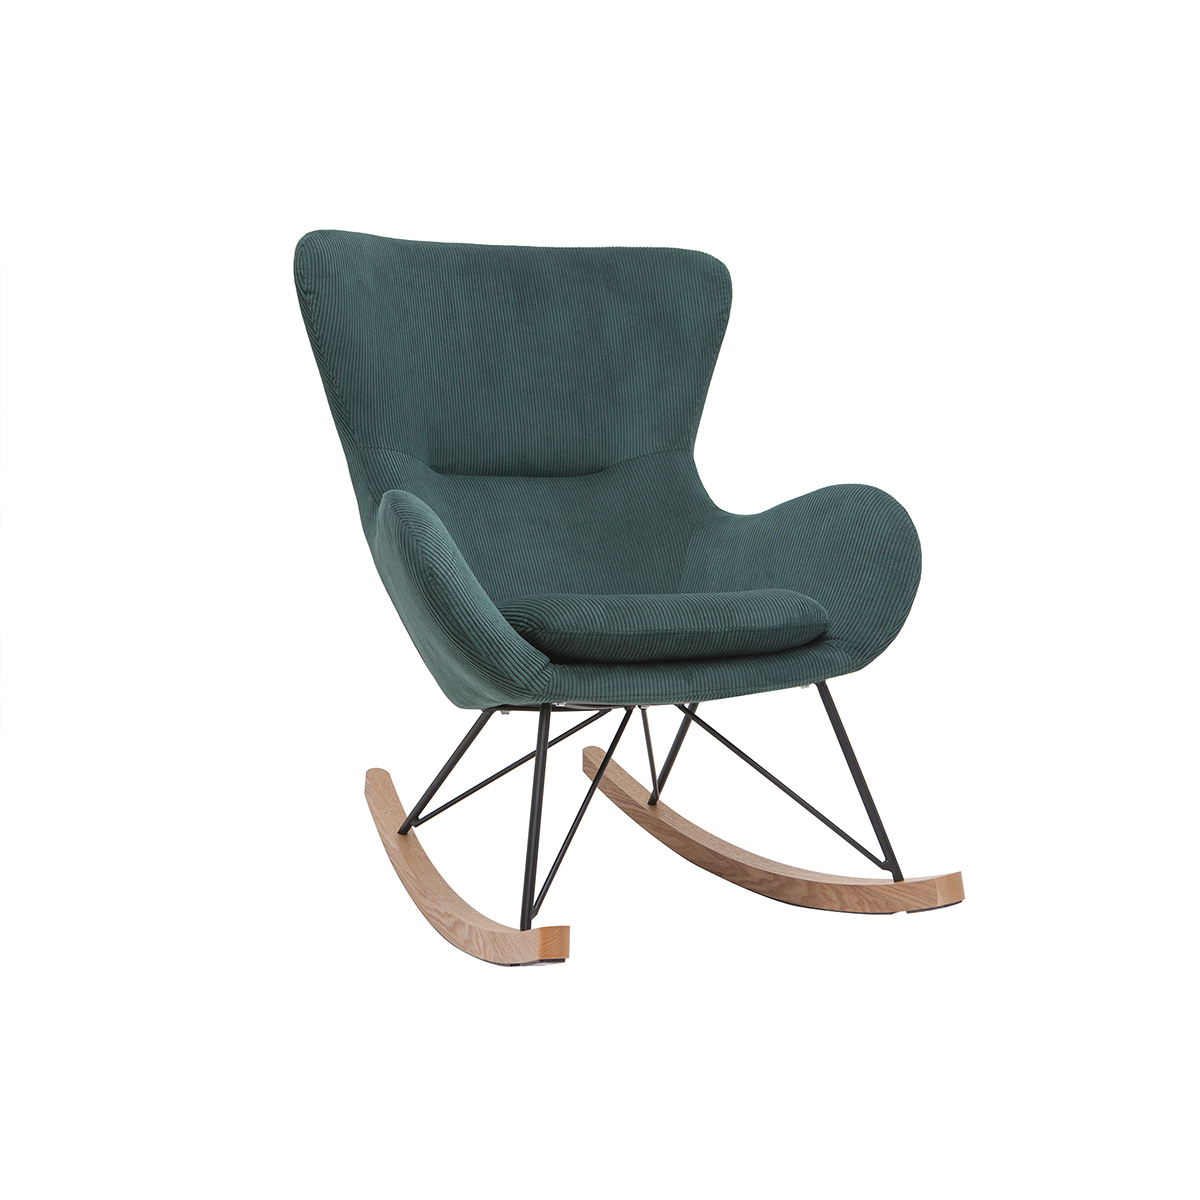 Rocking chair design velours côtelé vert ESKUA vue1